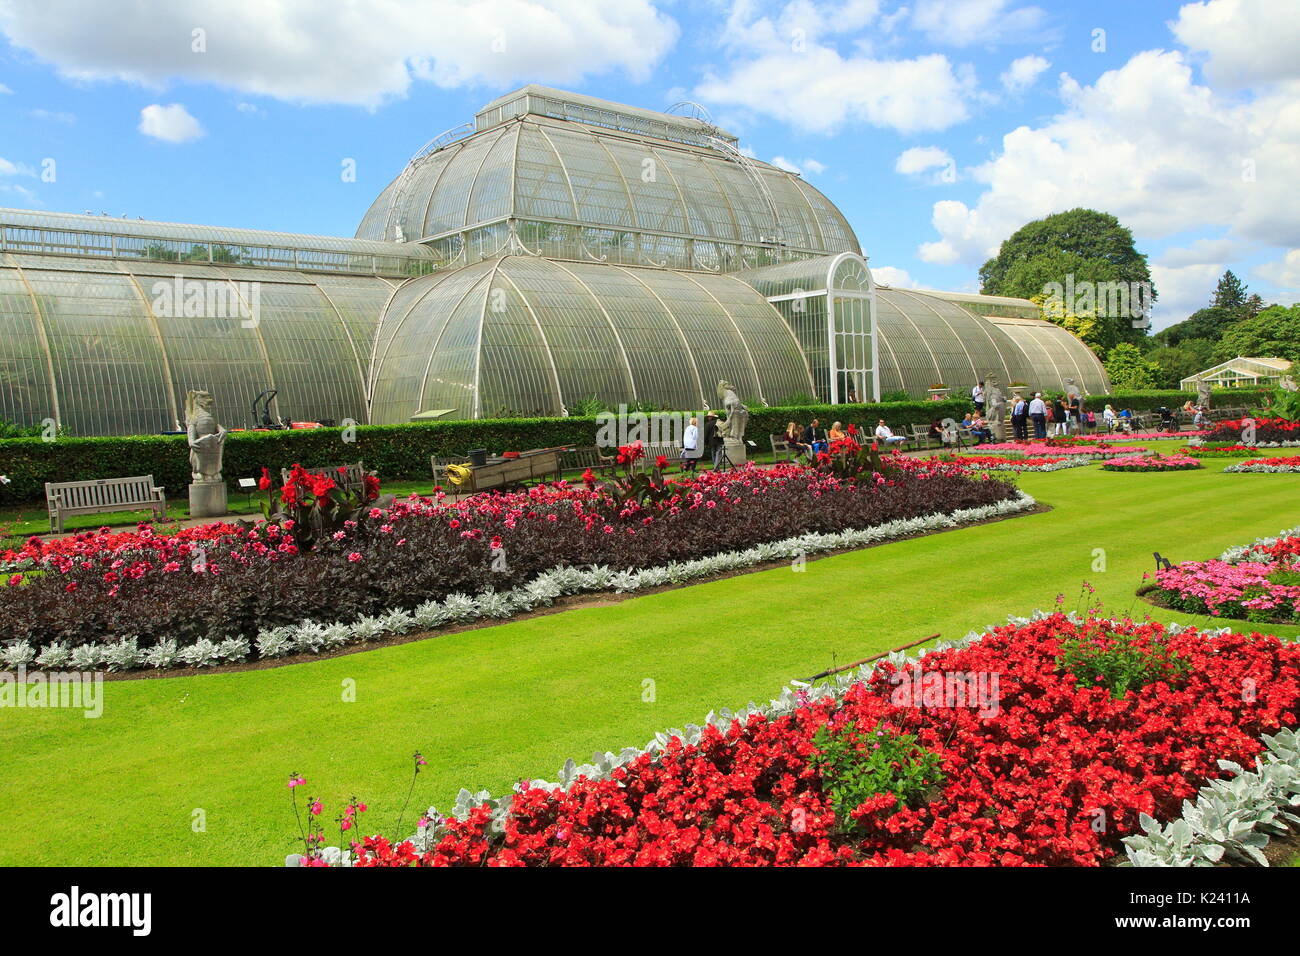 Le Palm House at Royal Botanic Gardens, Kew, Londres, Angleterre, Royaume-Uni Banque D'Images